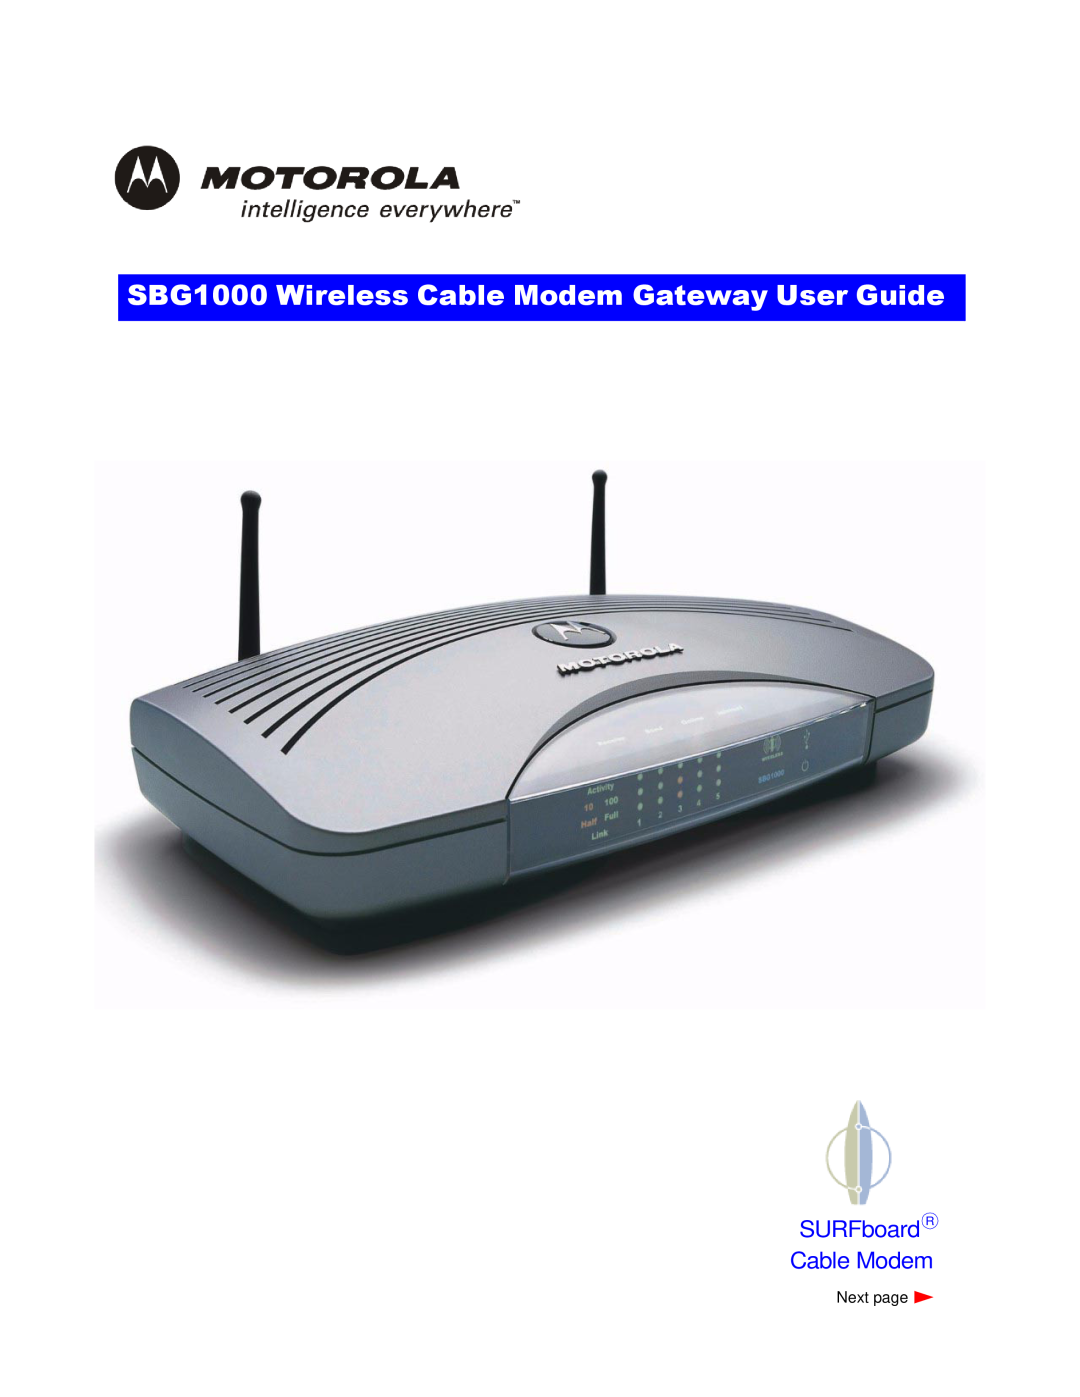 Motorola manual SBG1000 Wireless Cable Modem Gateway User Guide, SURFboard R Cable Modem 